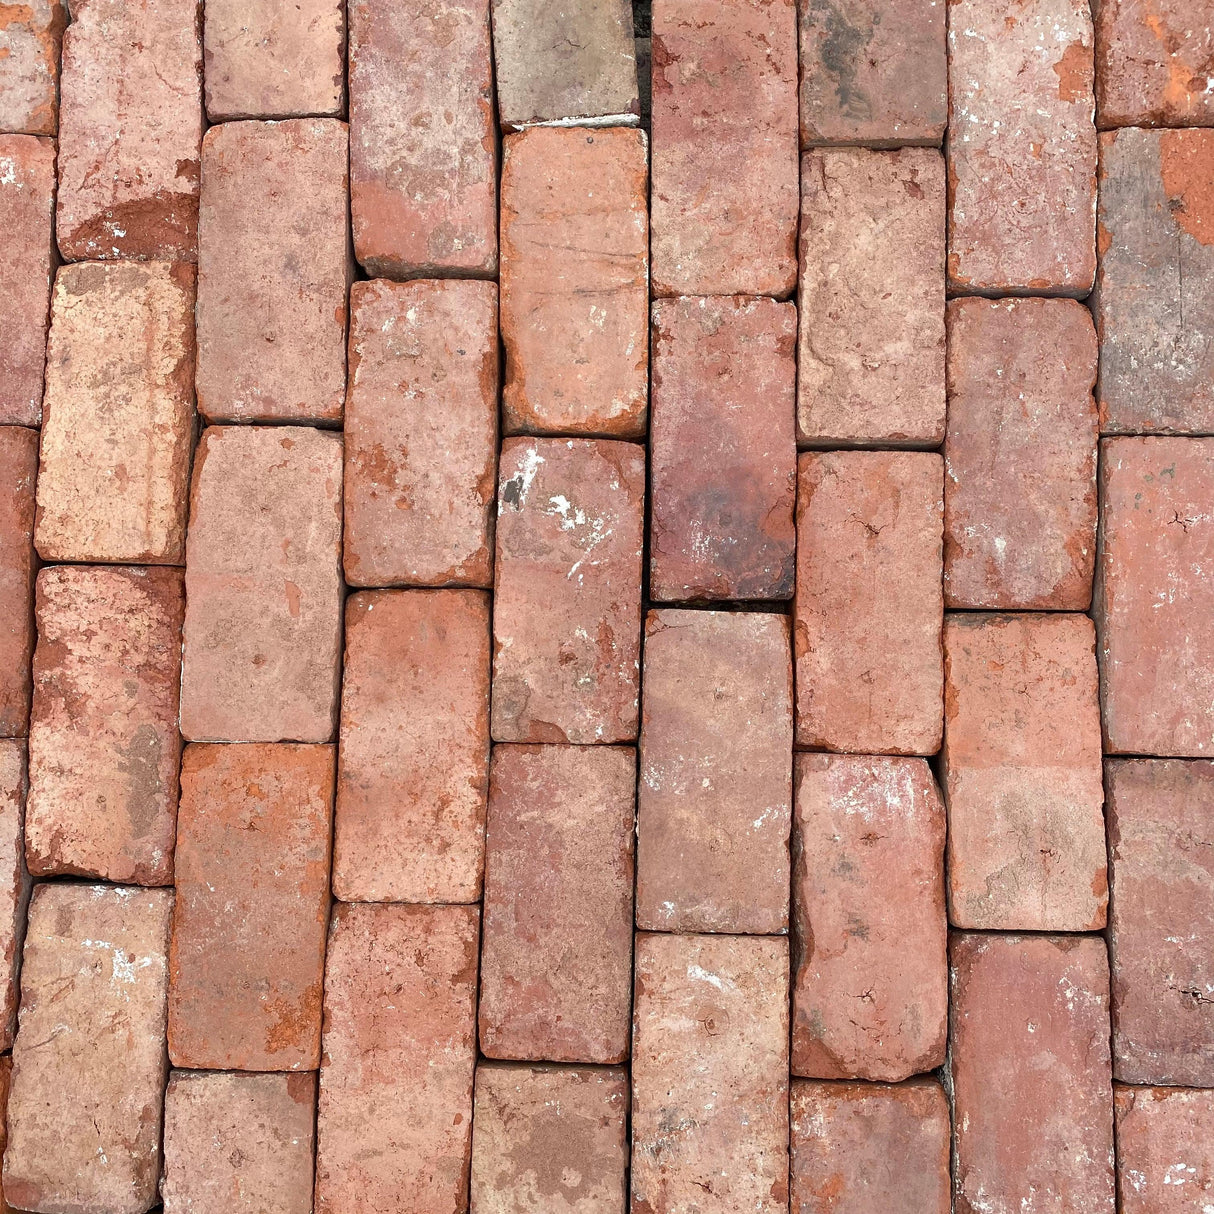 Reclaimed Red Paving Bricks | Pack of 250 Bricks - Reclaimed Brick Company